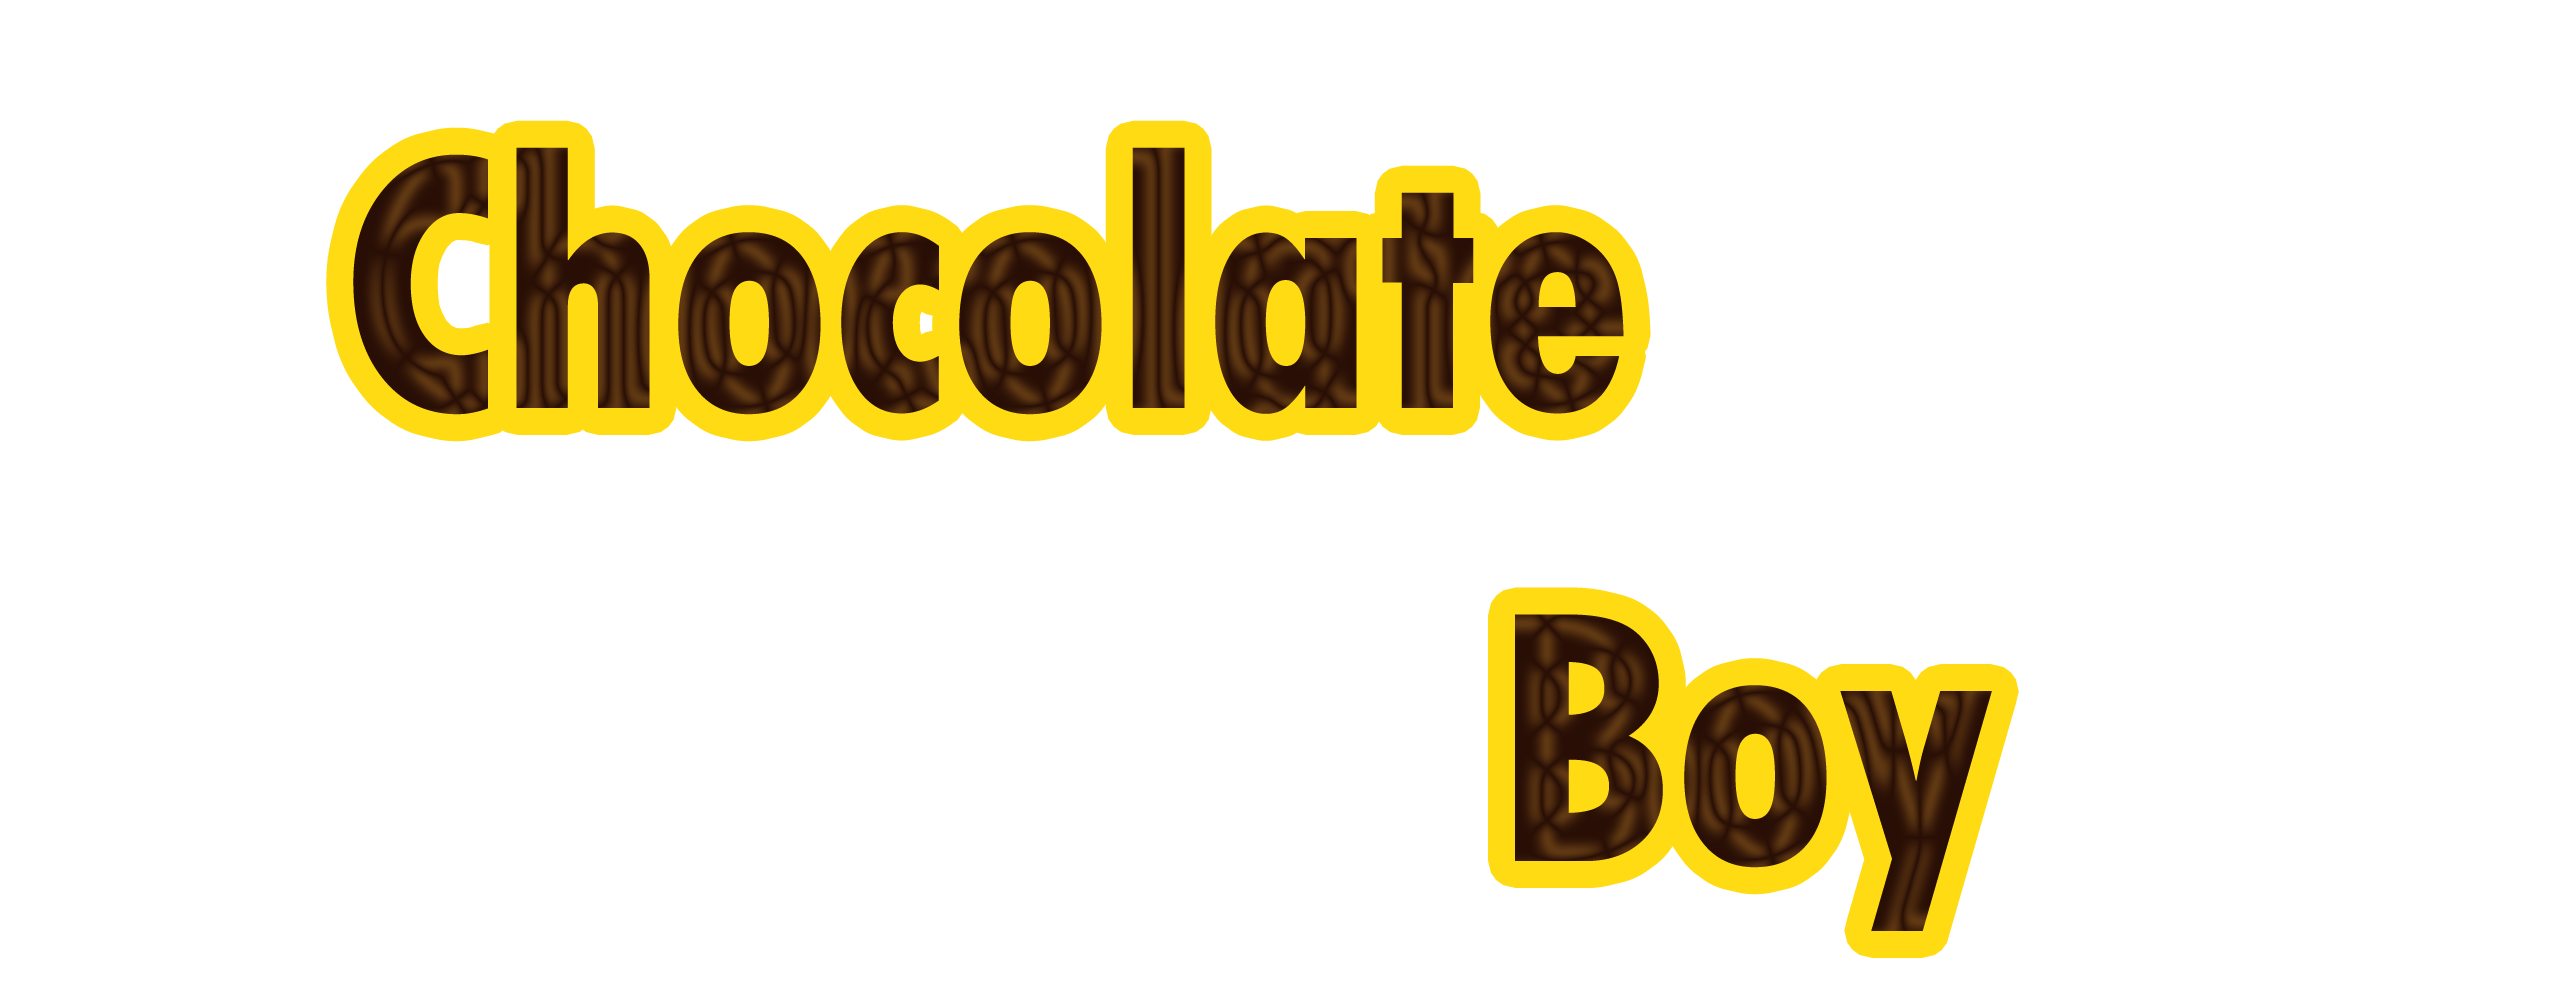 Chocolate Boy #12